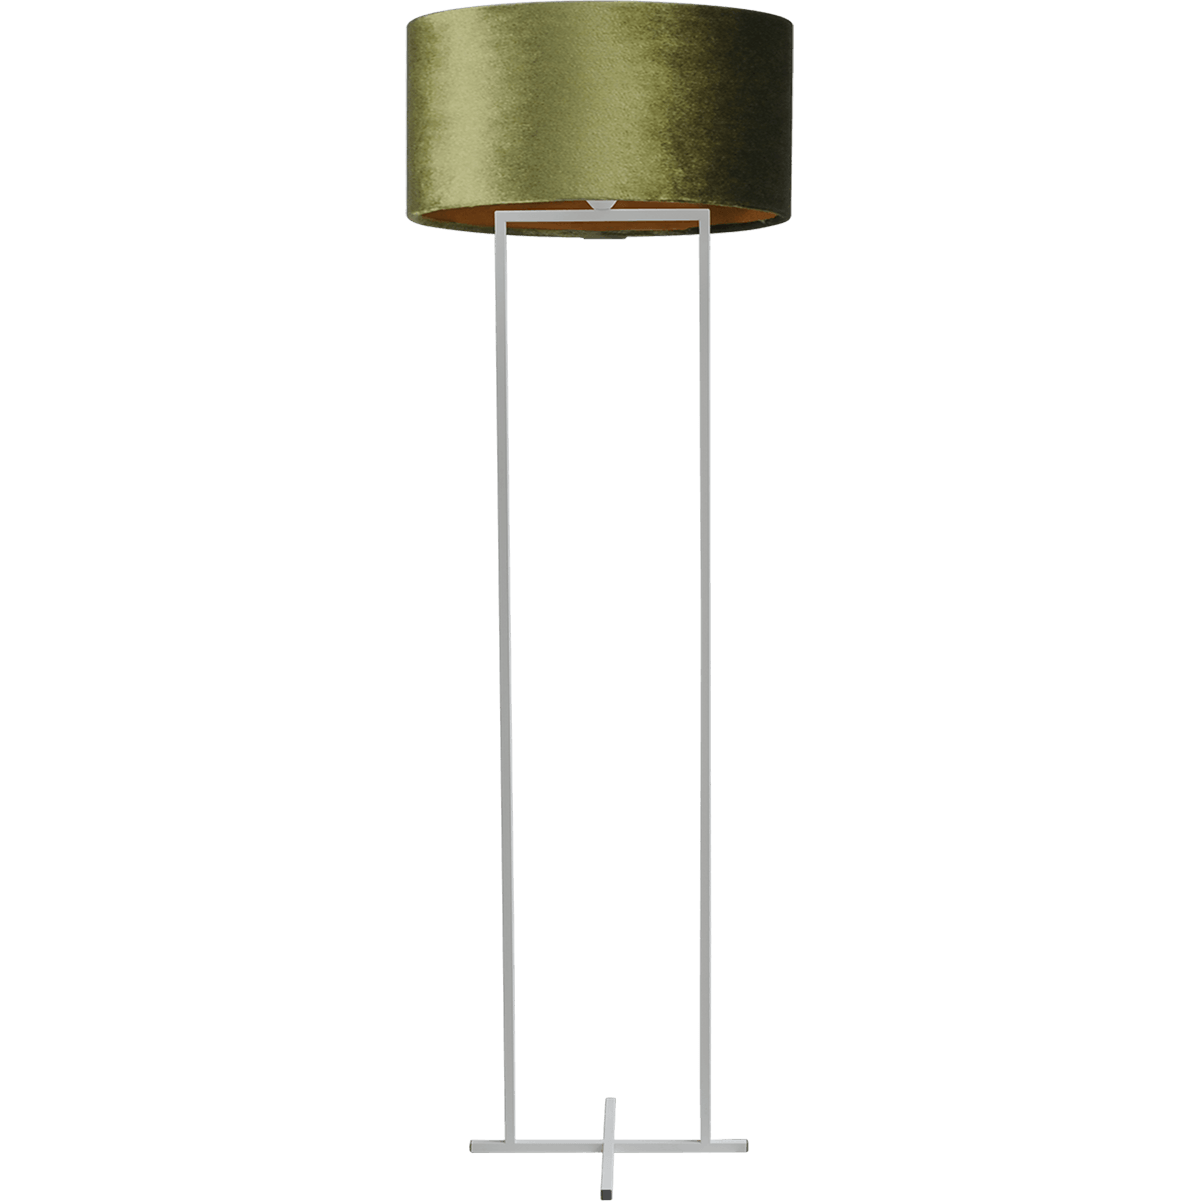 Vloerlamp Cross Rectangle wit structuur hoogte 158cm inclusief groene lampenkap Artik green 52/52/25 - MASTERLIGHT